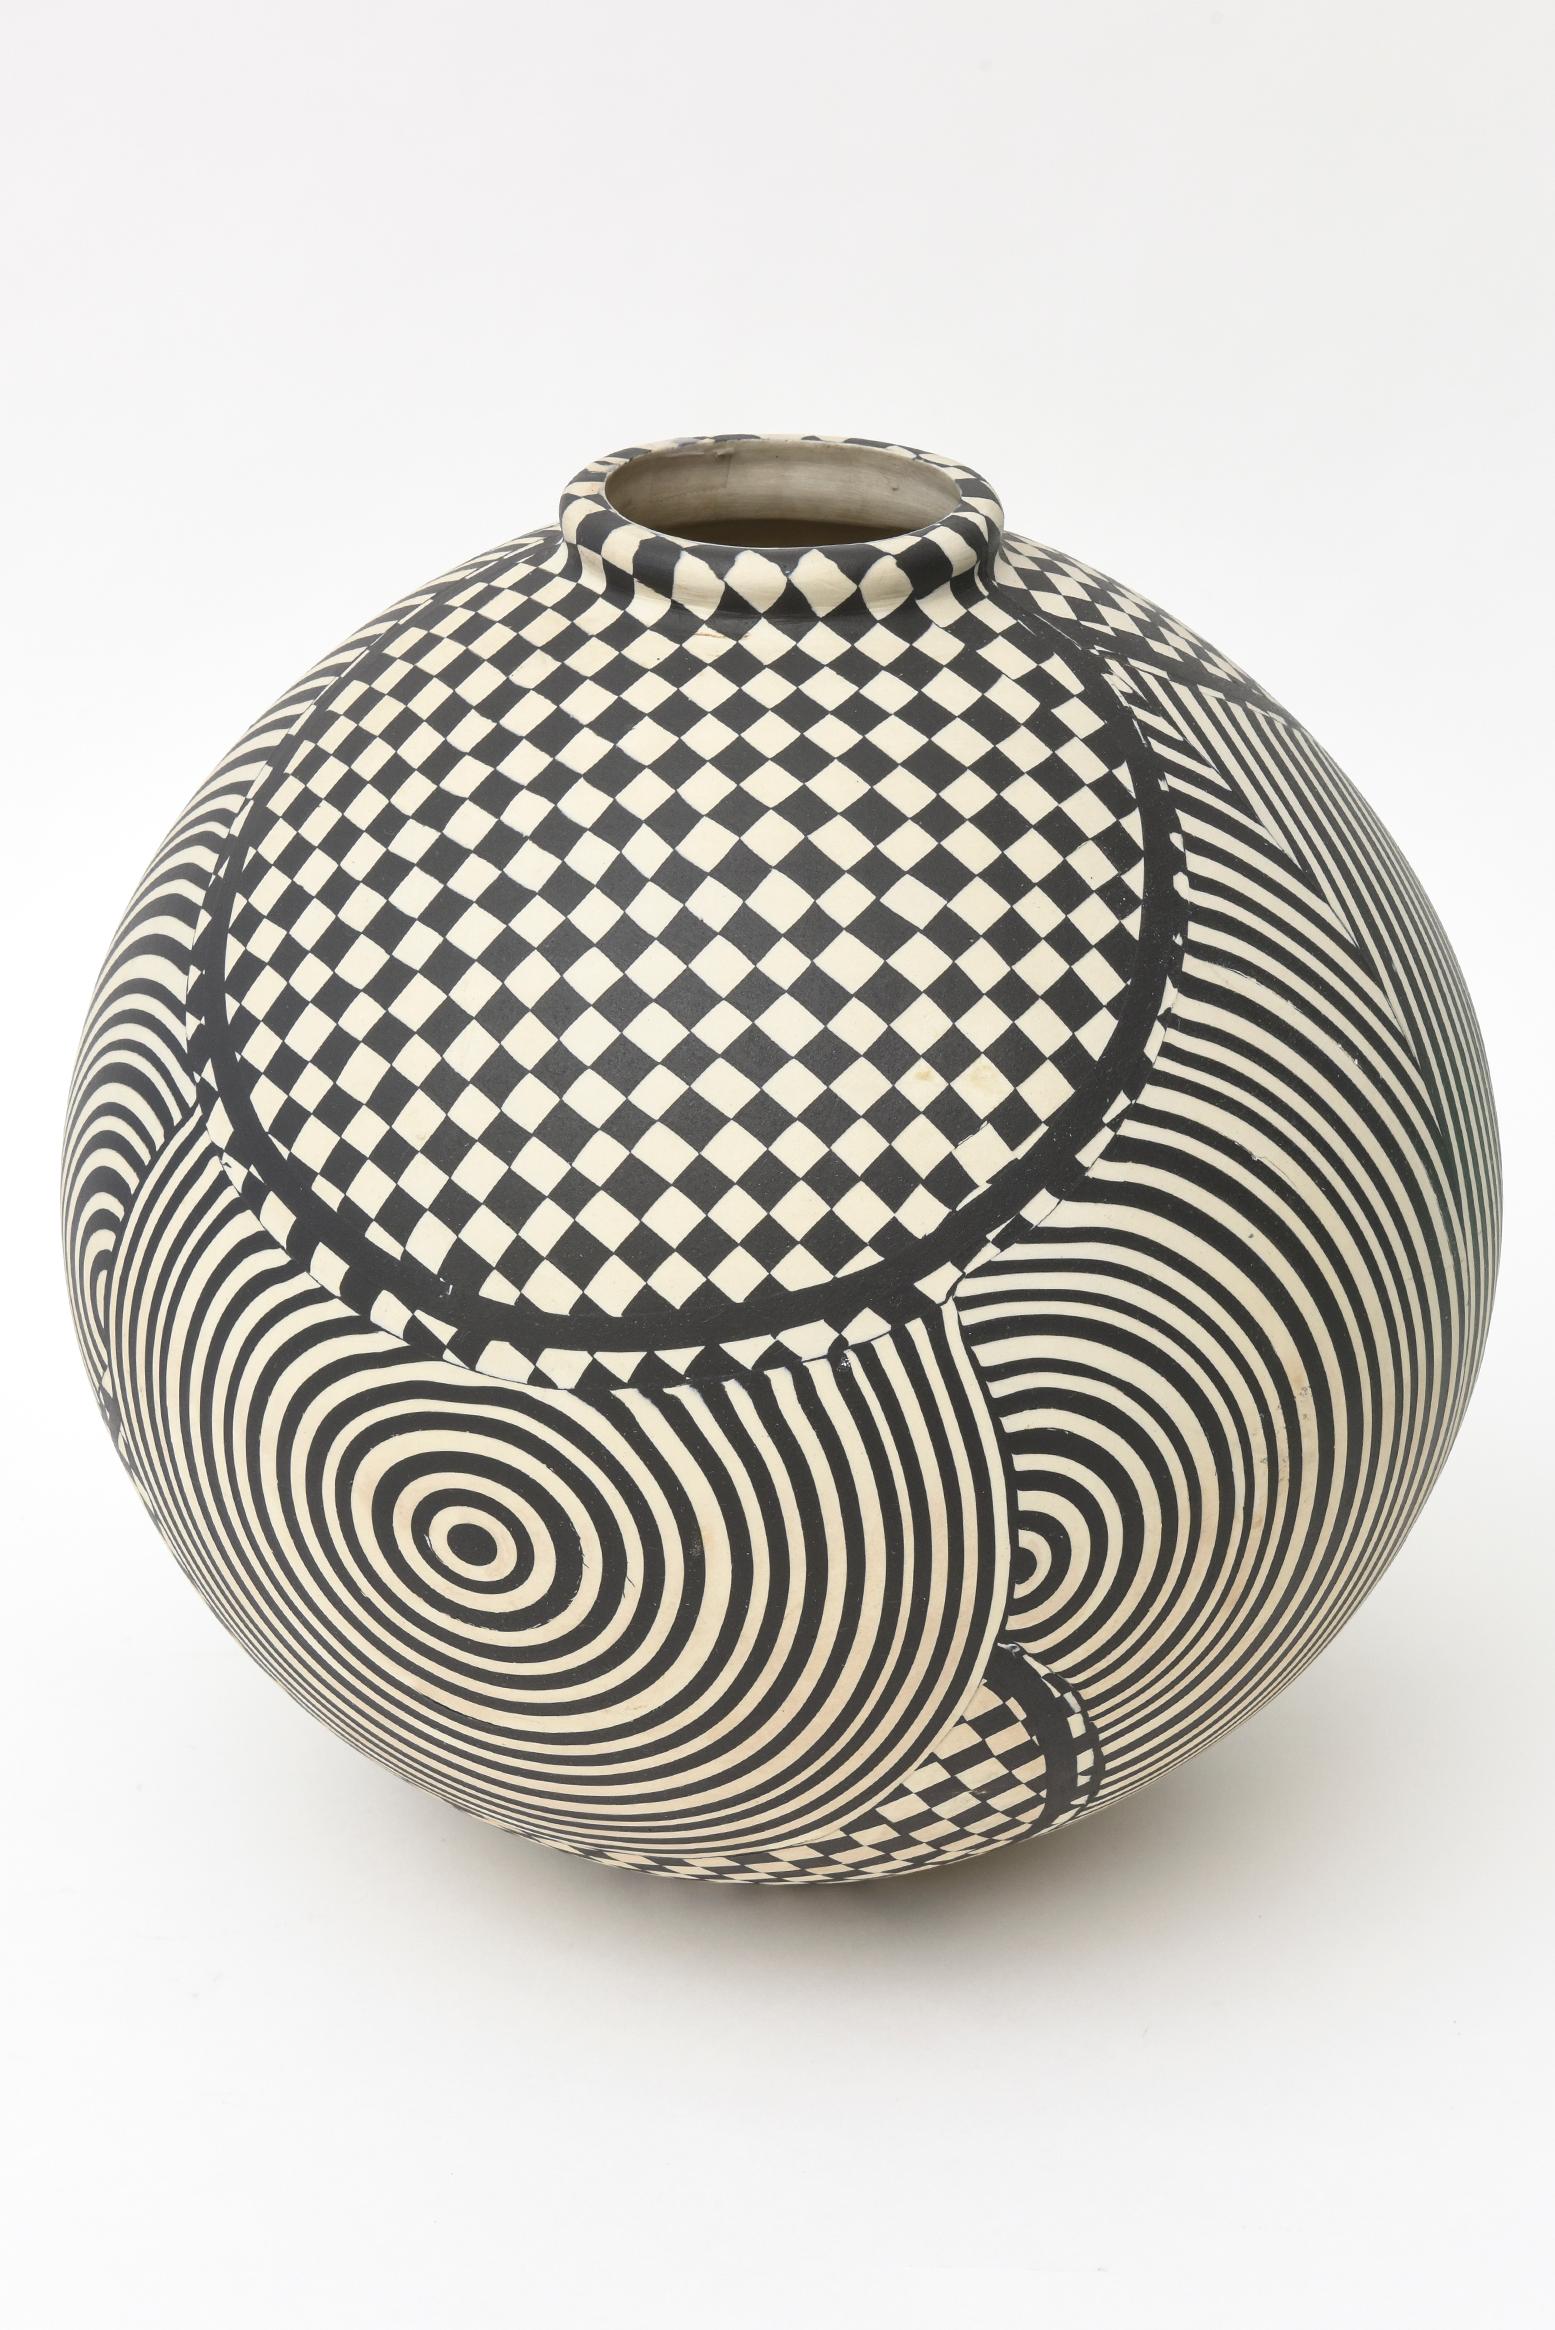 Modern Geometric Studio Ceramic Op Art Sculpture Bowl Vessel Vintage